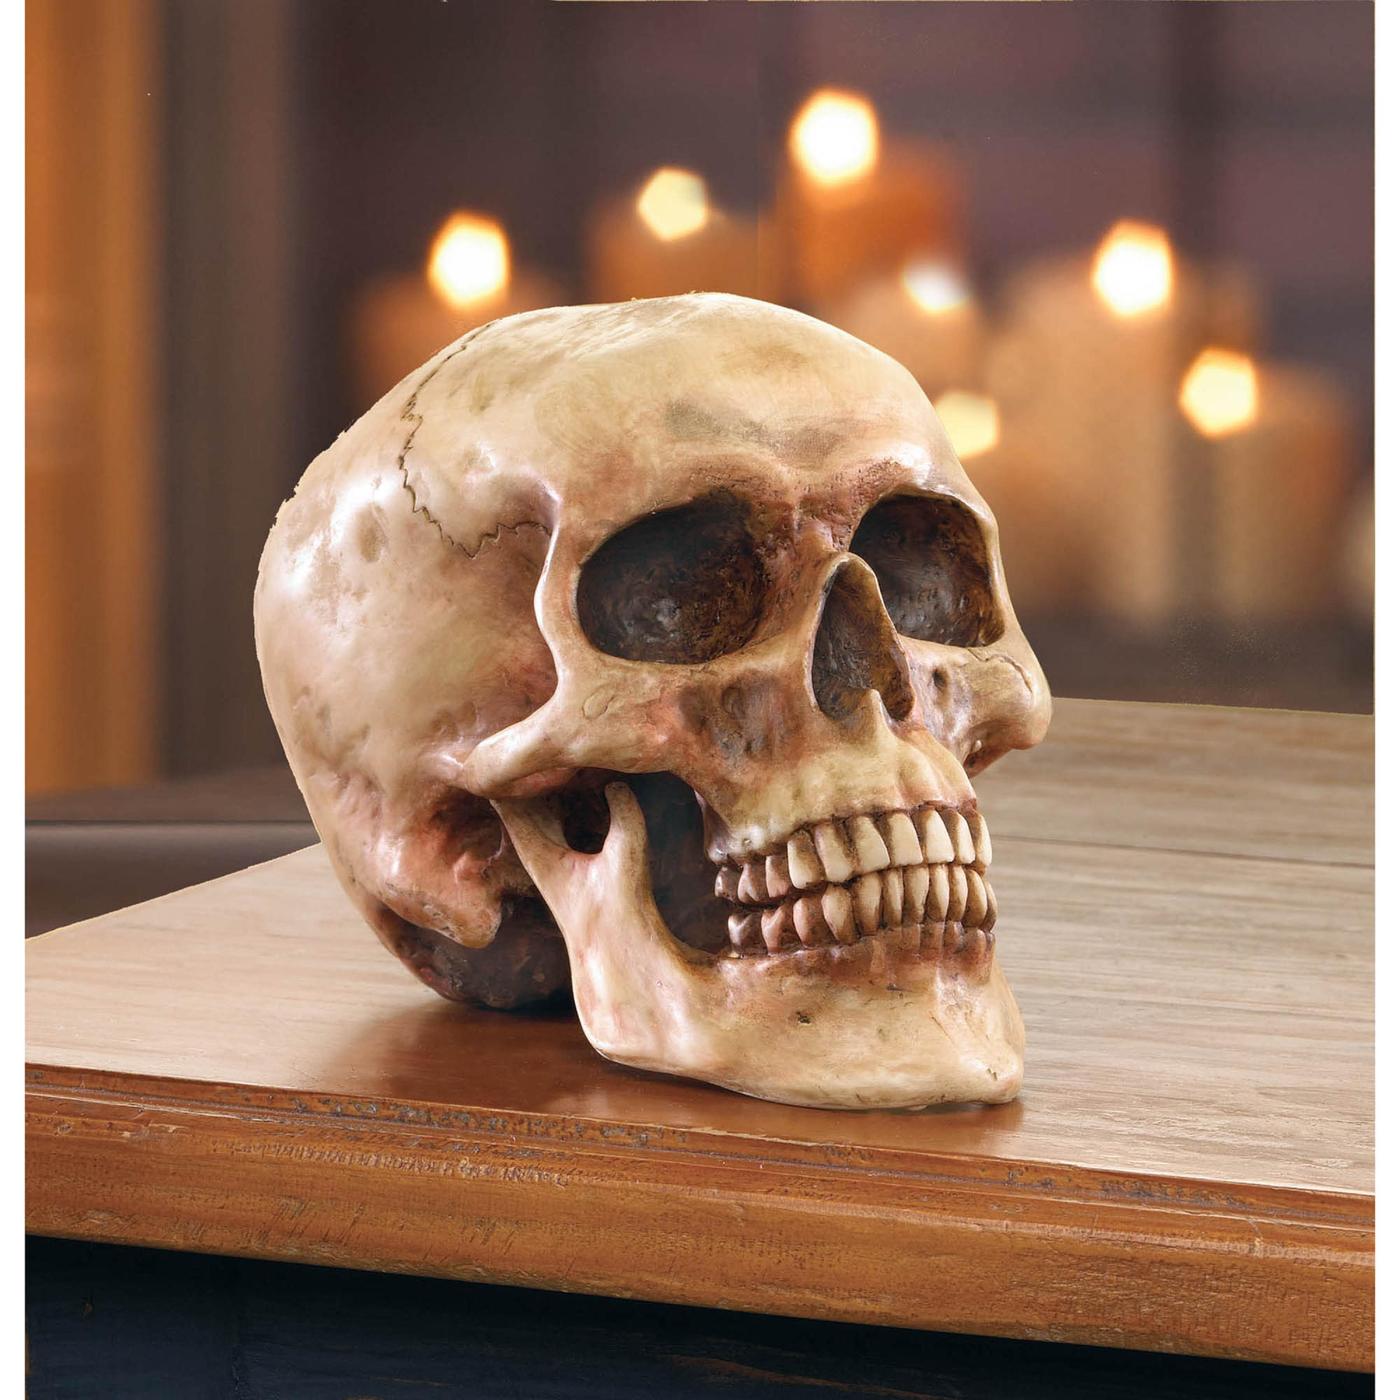 Grinning Resin Human Skull Spooky Halloween Party Decor Prop Statue Sculpture